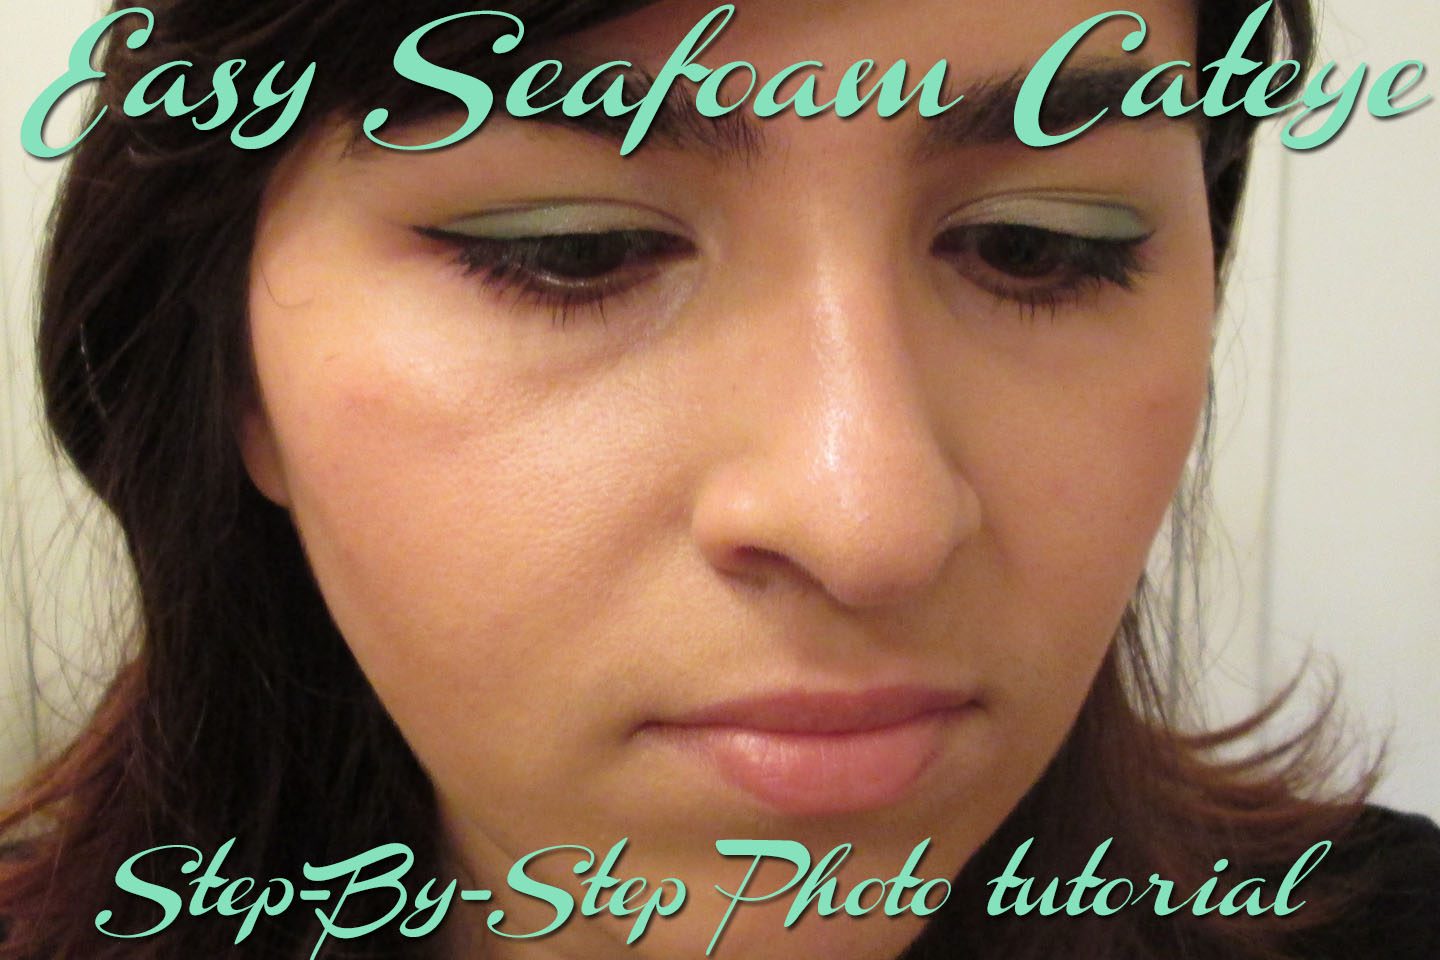 Seafoam Green Hair Tutorial: Step-by-Step Guide - wide 4